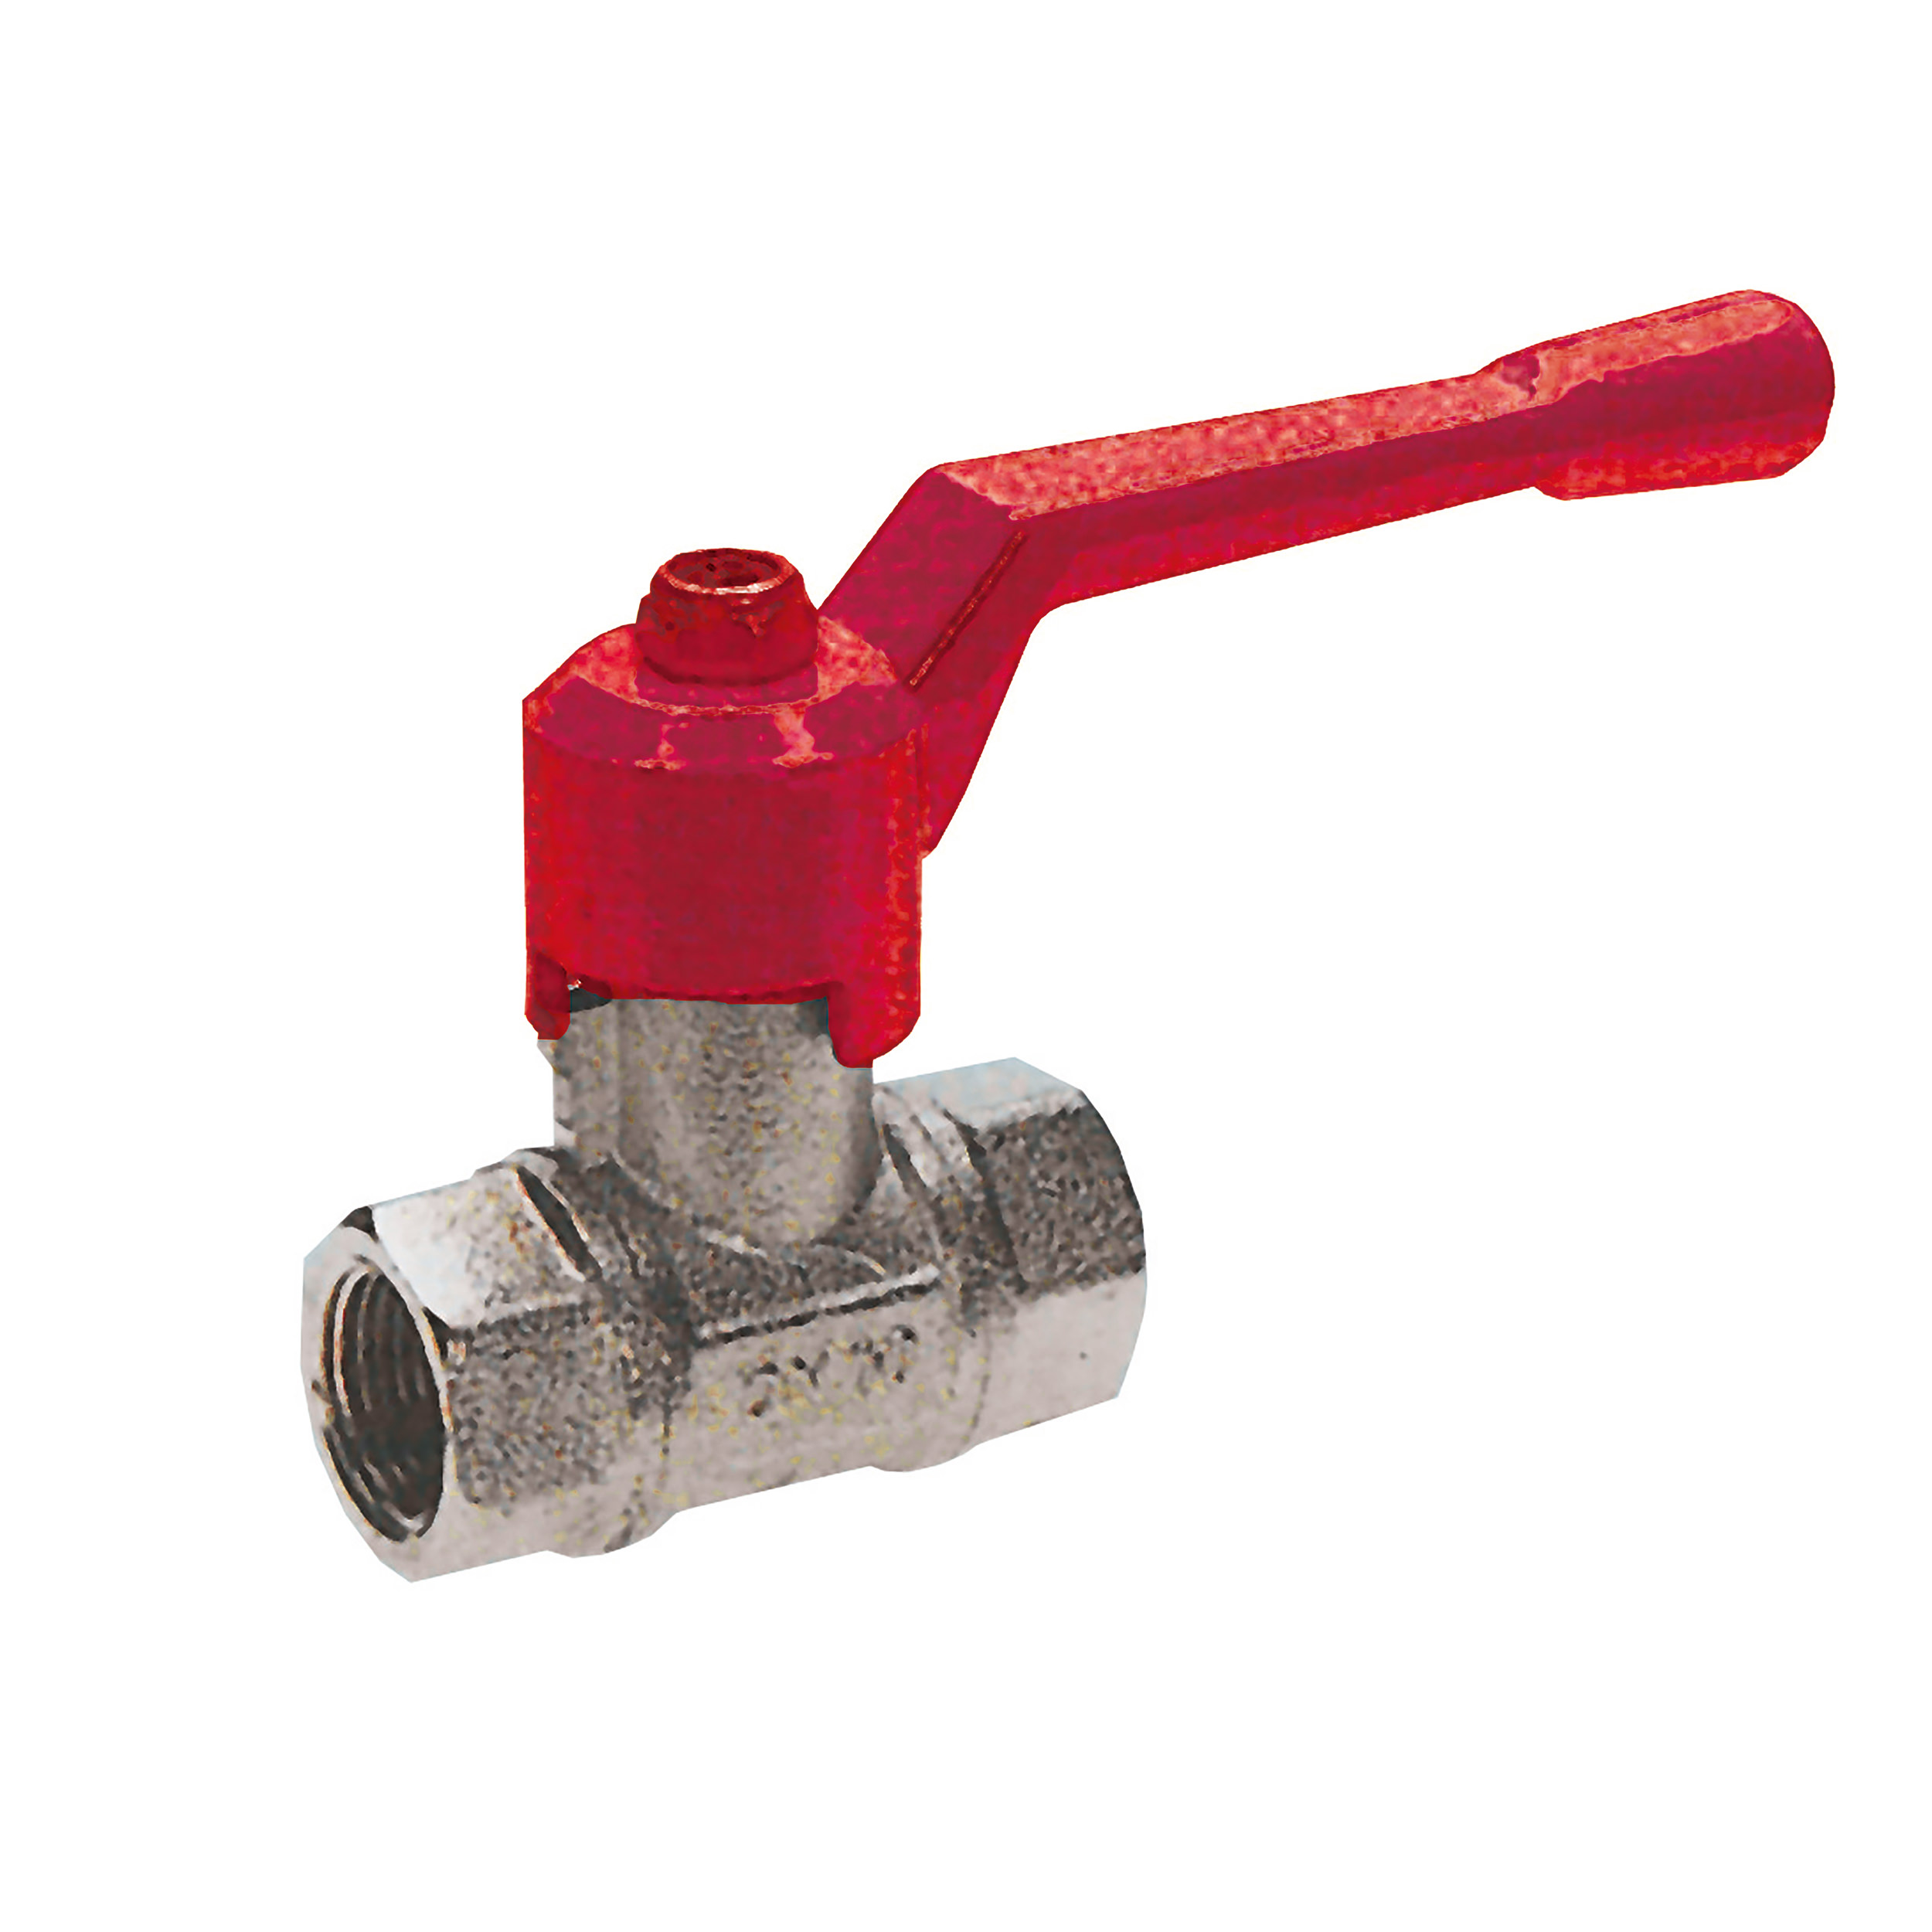 Ball valve w. metal lever, female thread